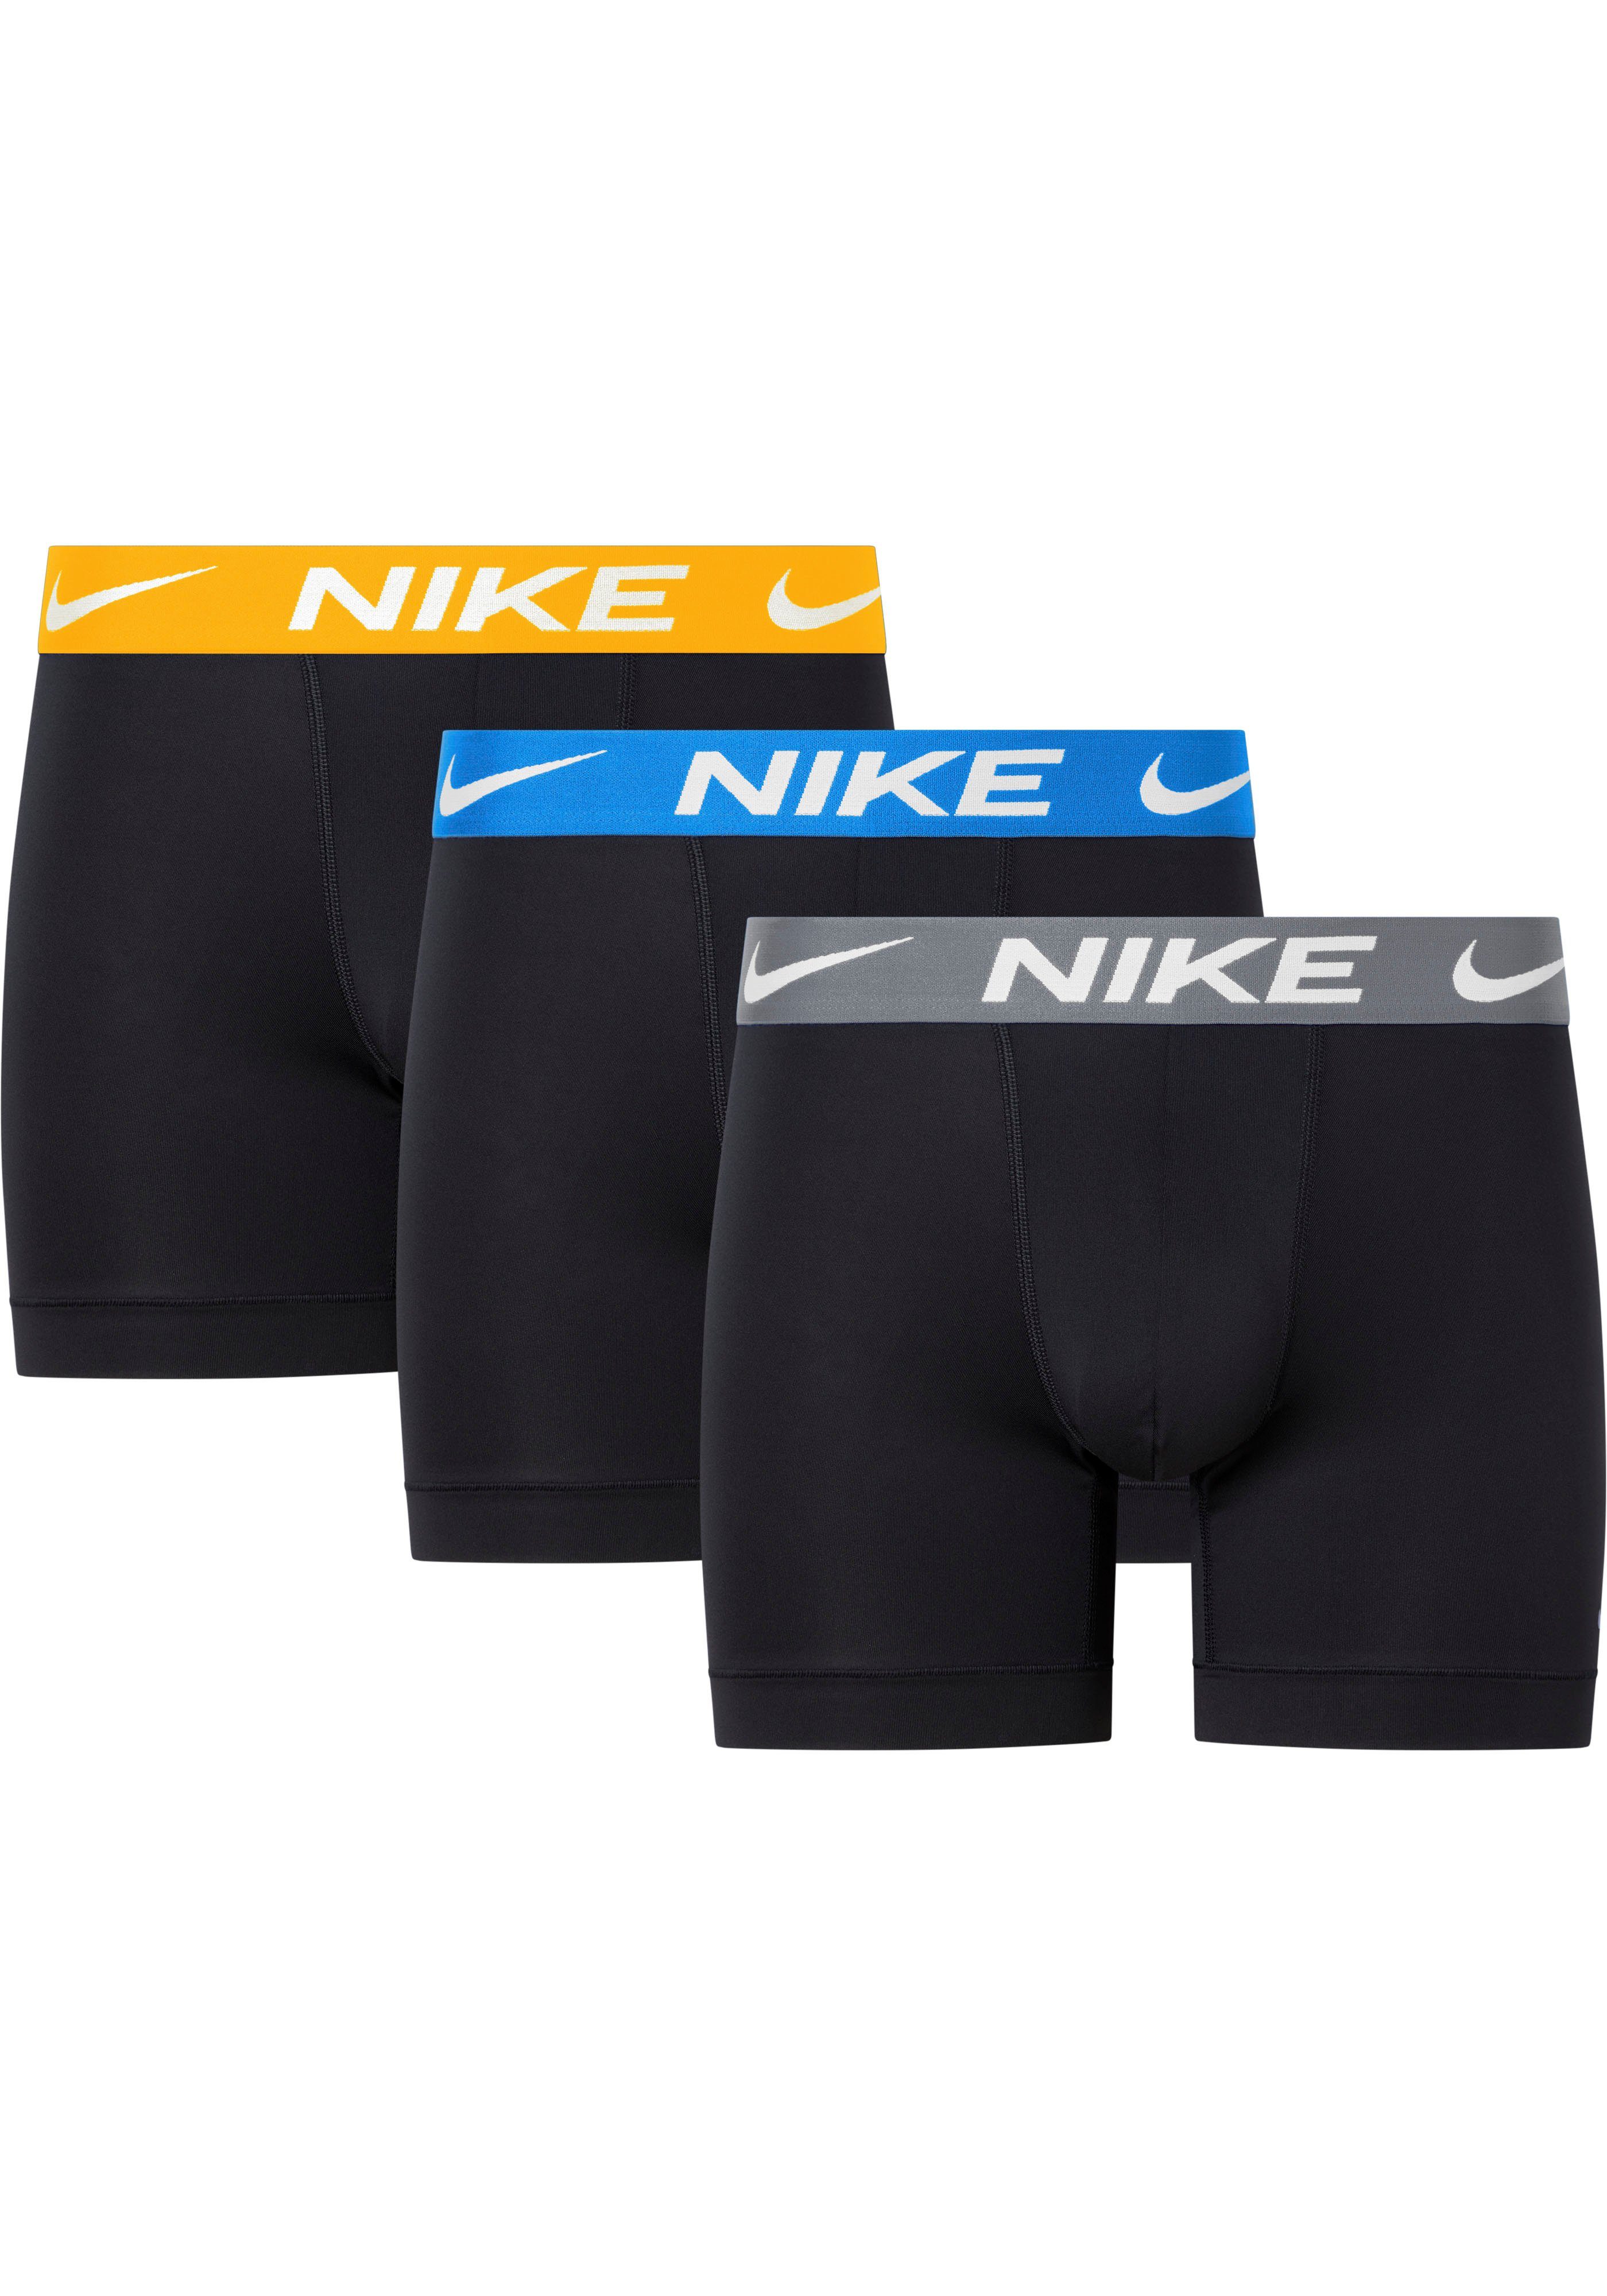 NIKE Underwear Boxer BOXER BRIEF 3PK (Packung, 3-St., 3er-Pack) mit Nike Logo-Elastikbund BLACK/BLUE/COOL-GREY/TOTAL-ORANGE